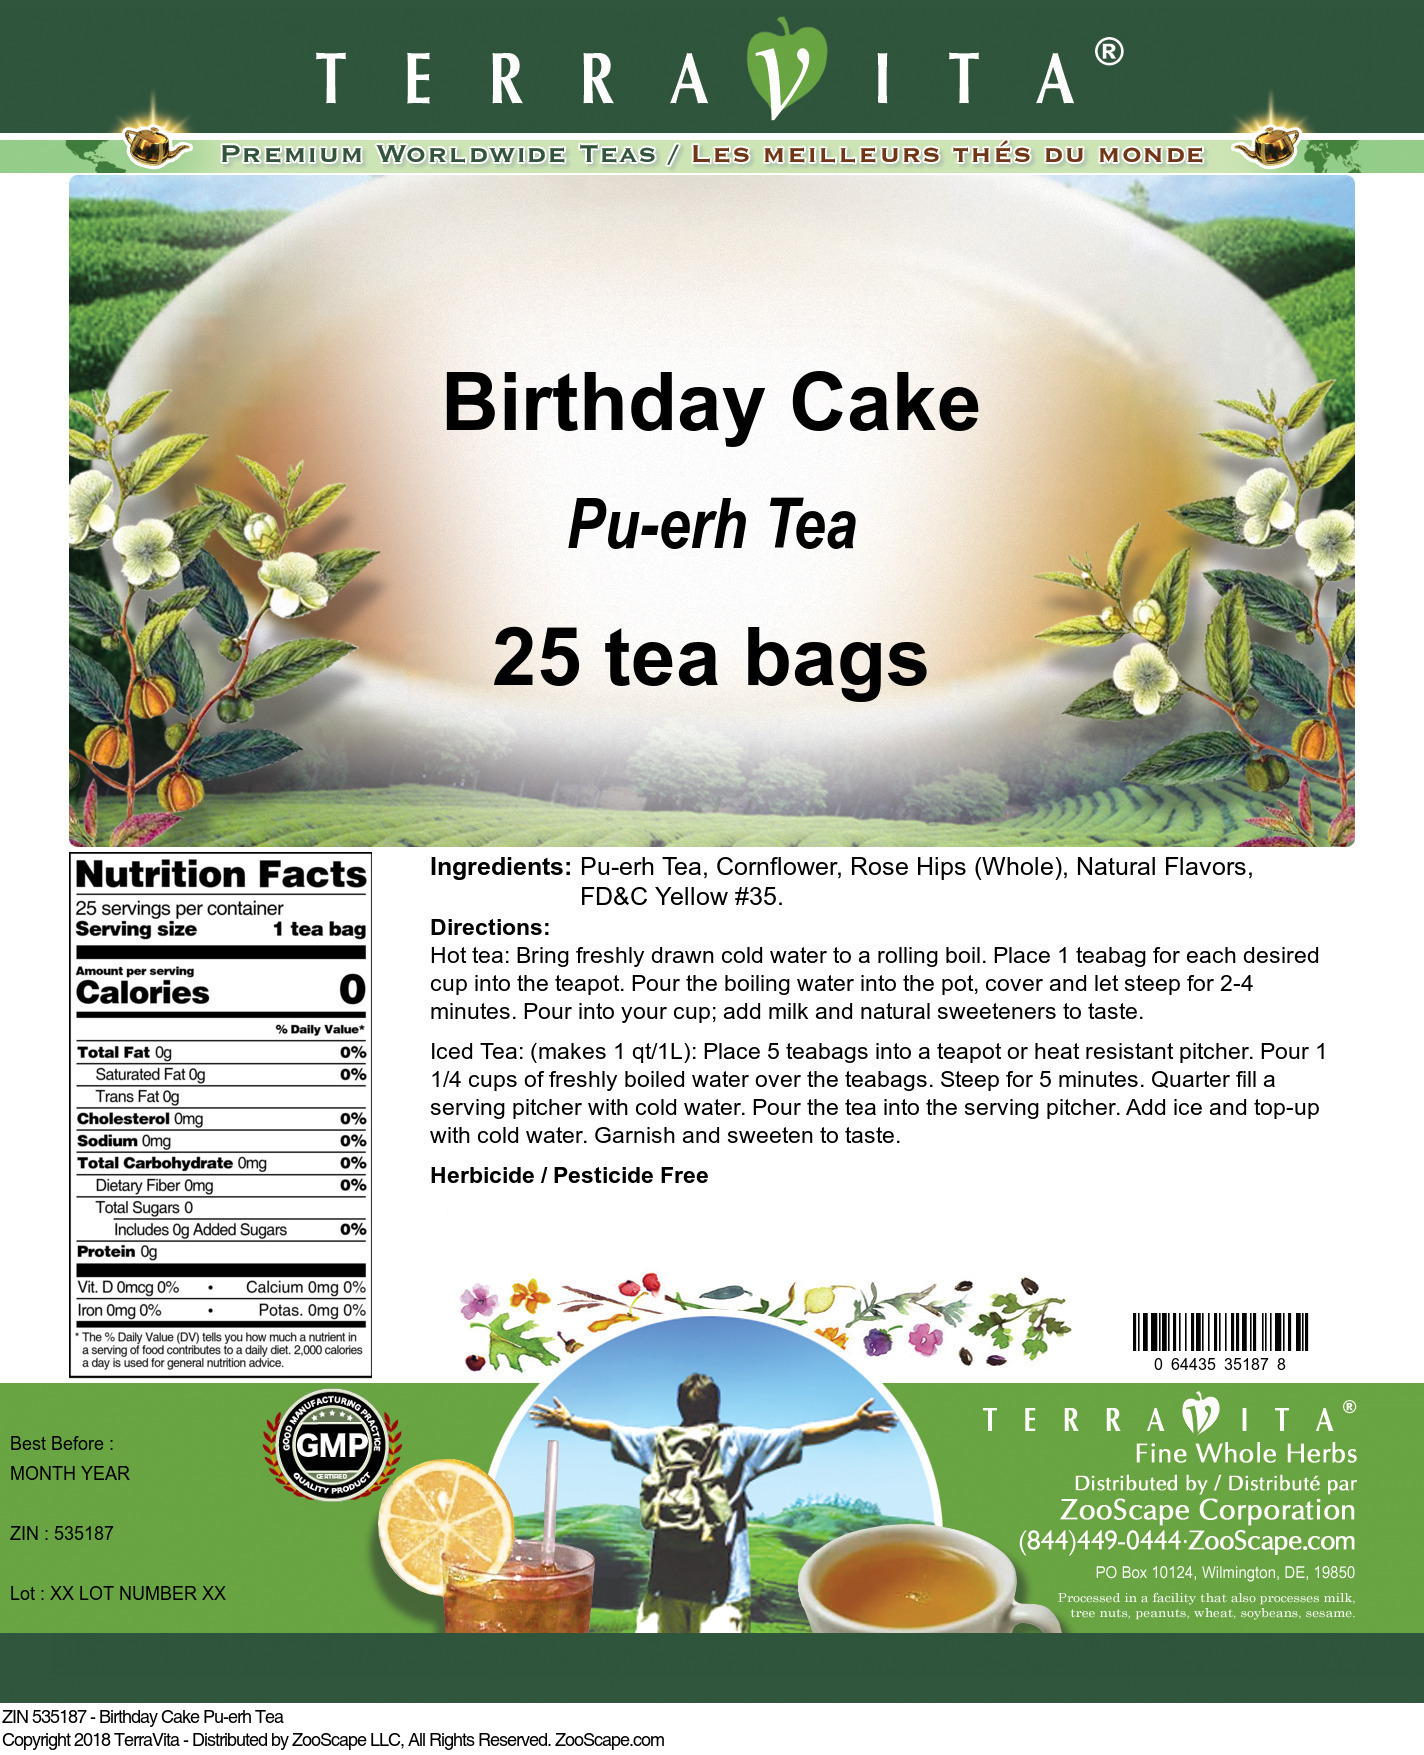 Birthday Cake Pu-erh Tea - Label